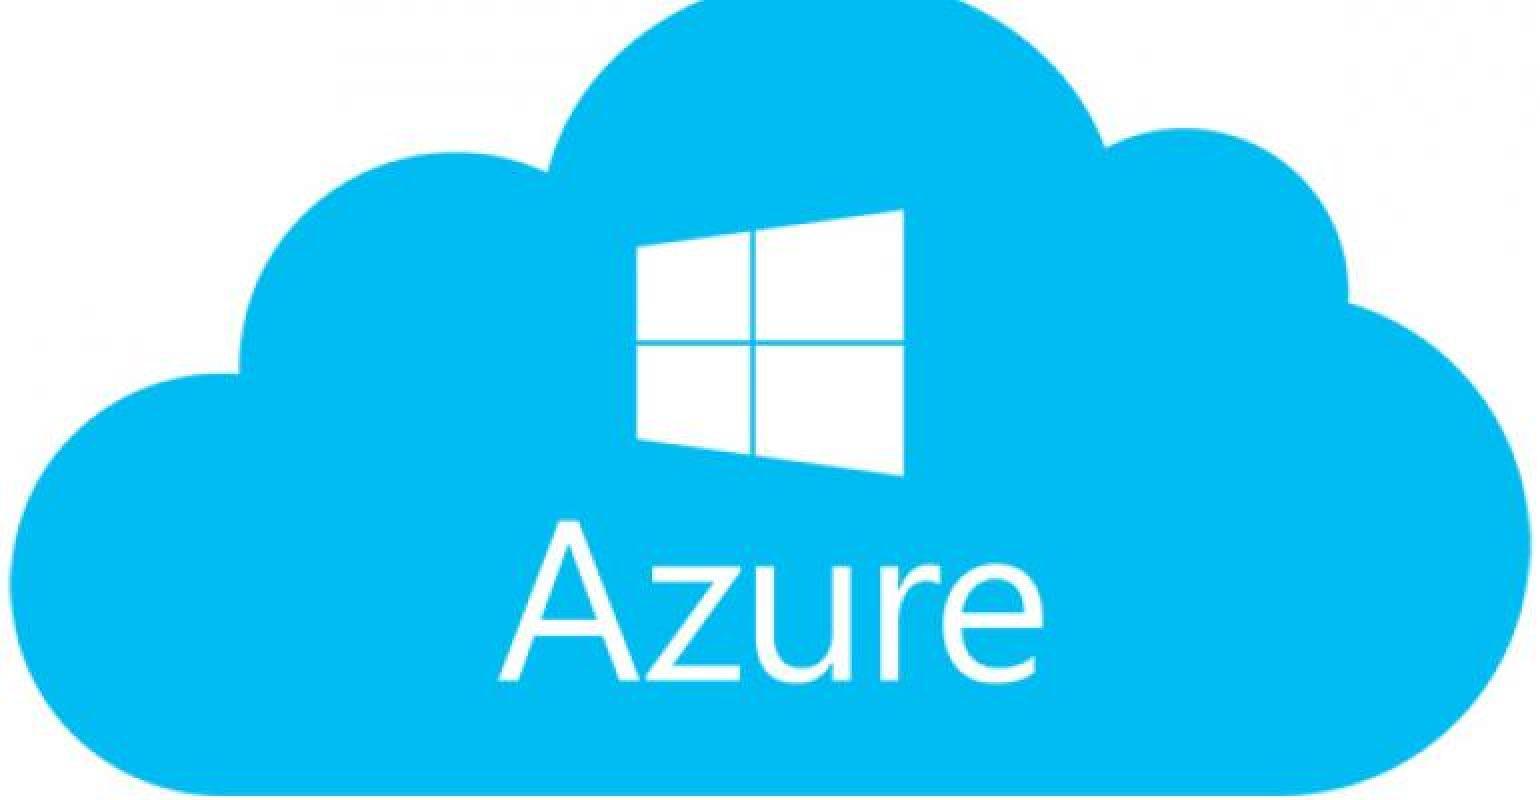 Microsoft Azure training for Beginners in Avondale | Microsoft Azure Fundamentals | Azure cloud computing training | Microsoft Azure Fundamentals AZ-900 Certification Exam Prep (Preparation) Training Course